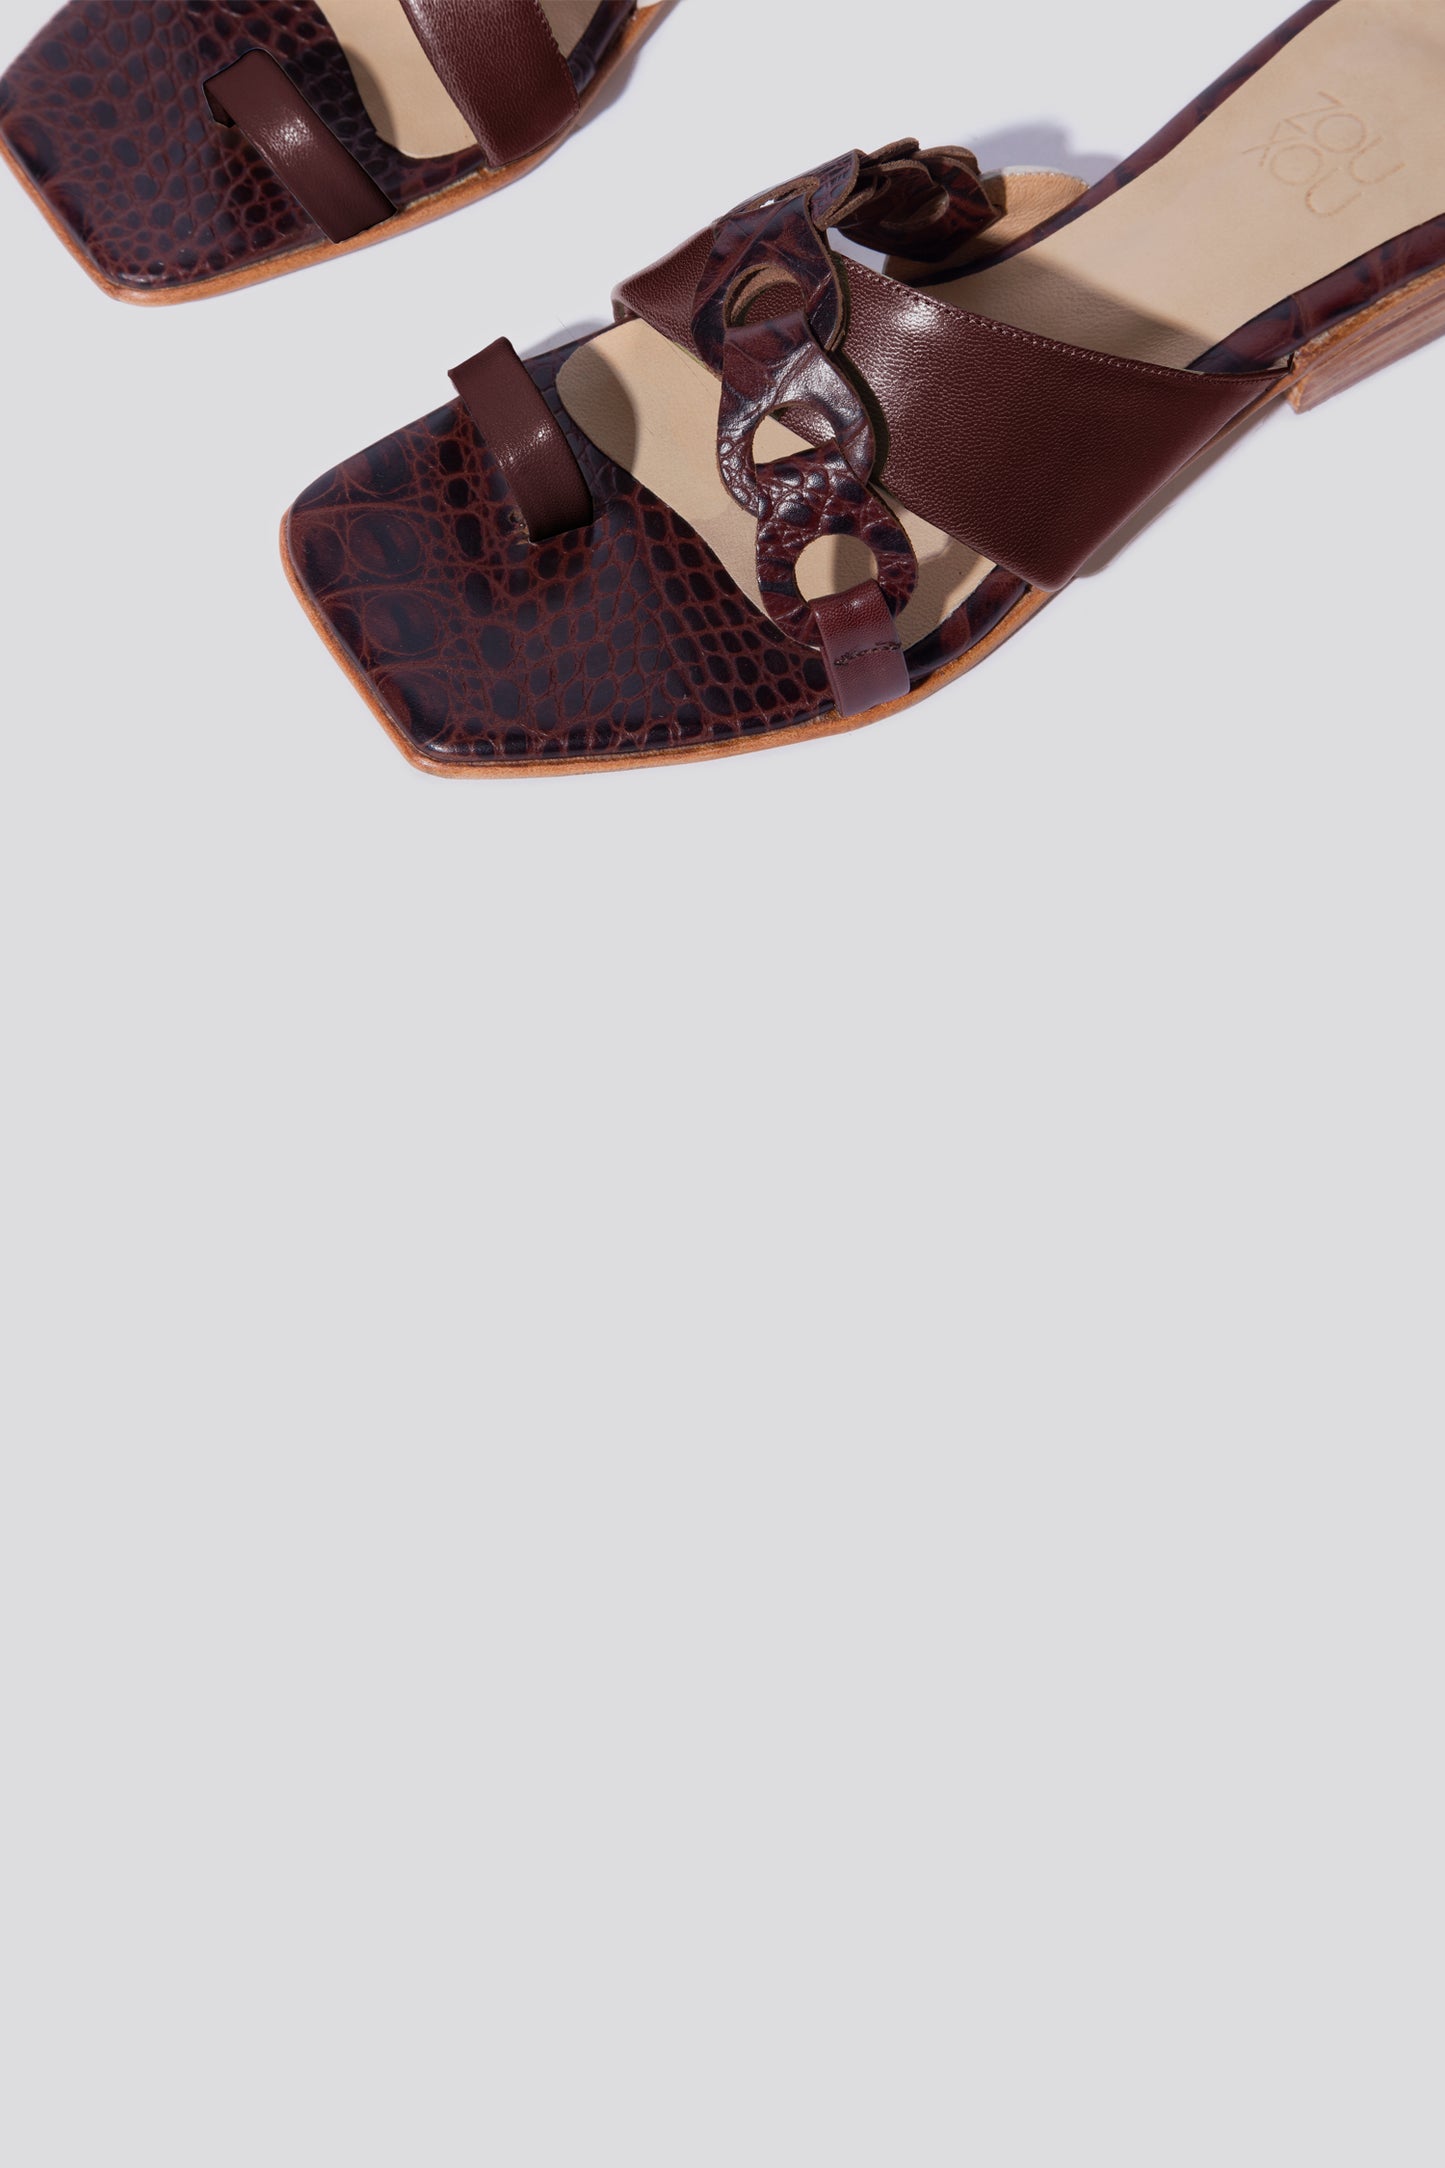 Río Toe Ring Thong Sandal in Chocolate/Hazelnut